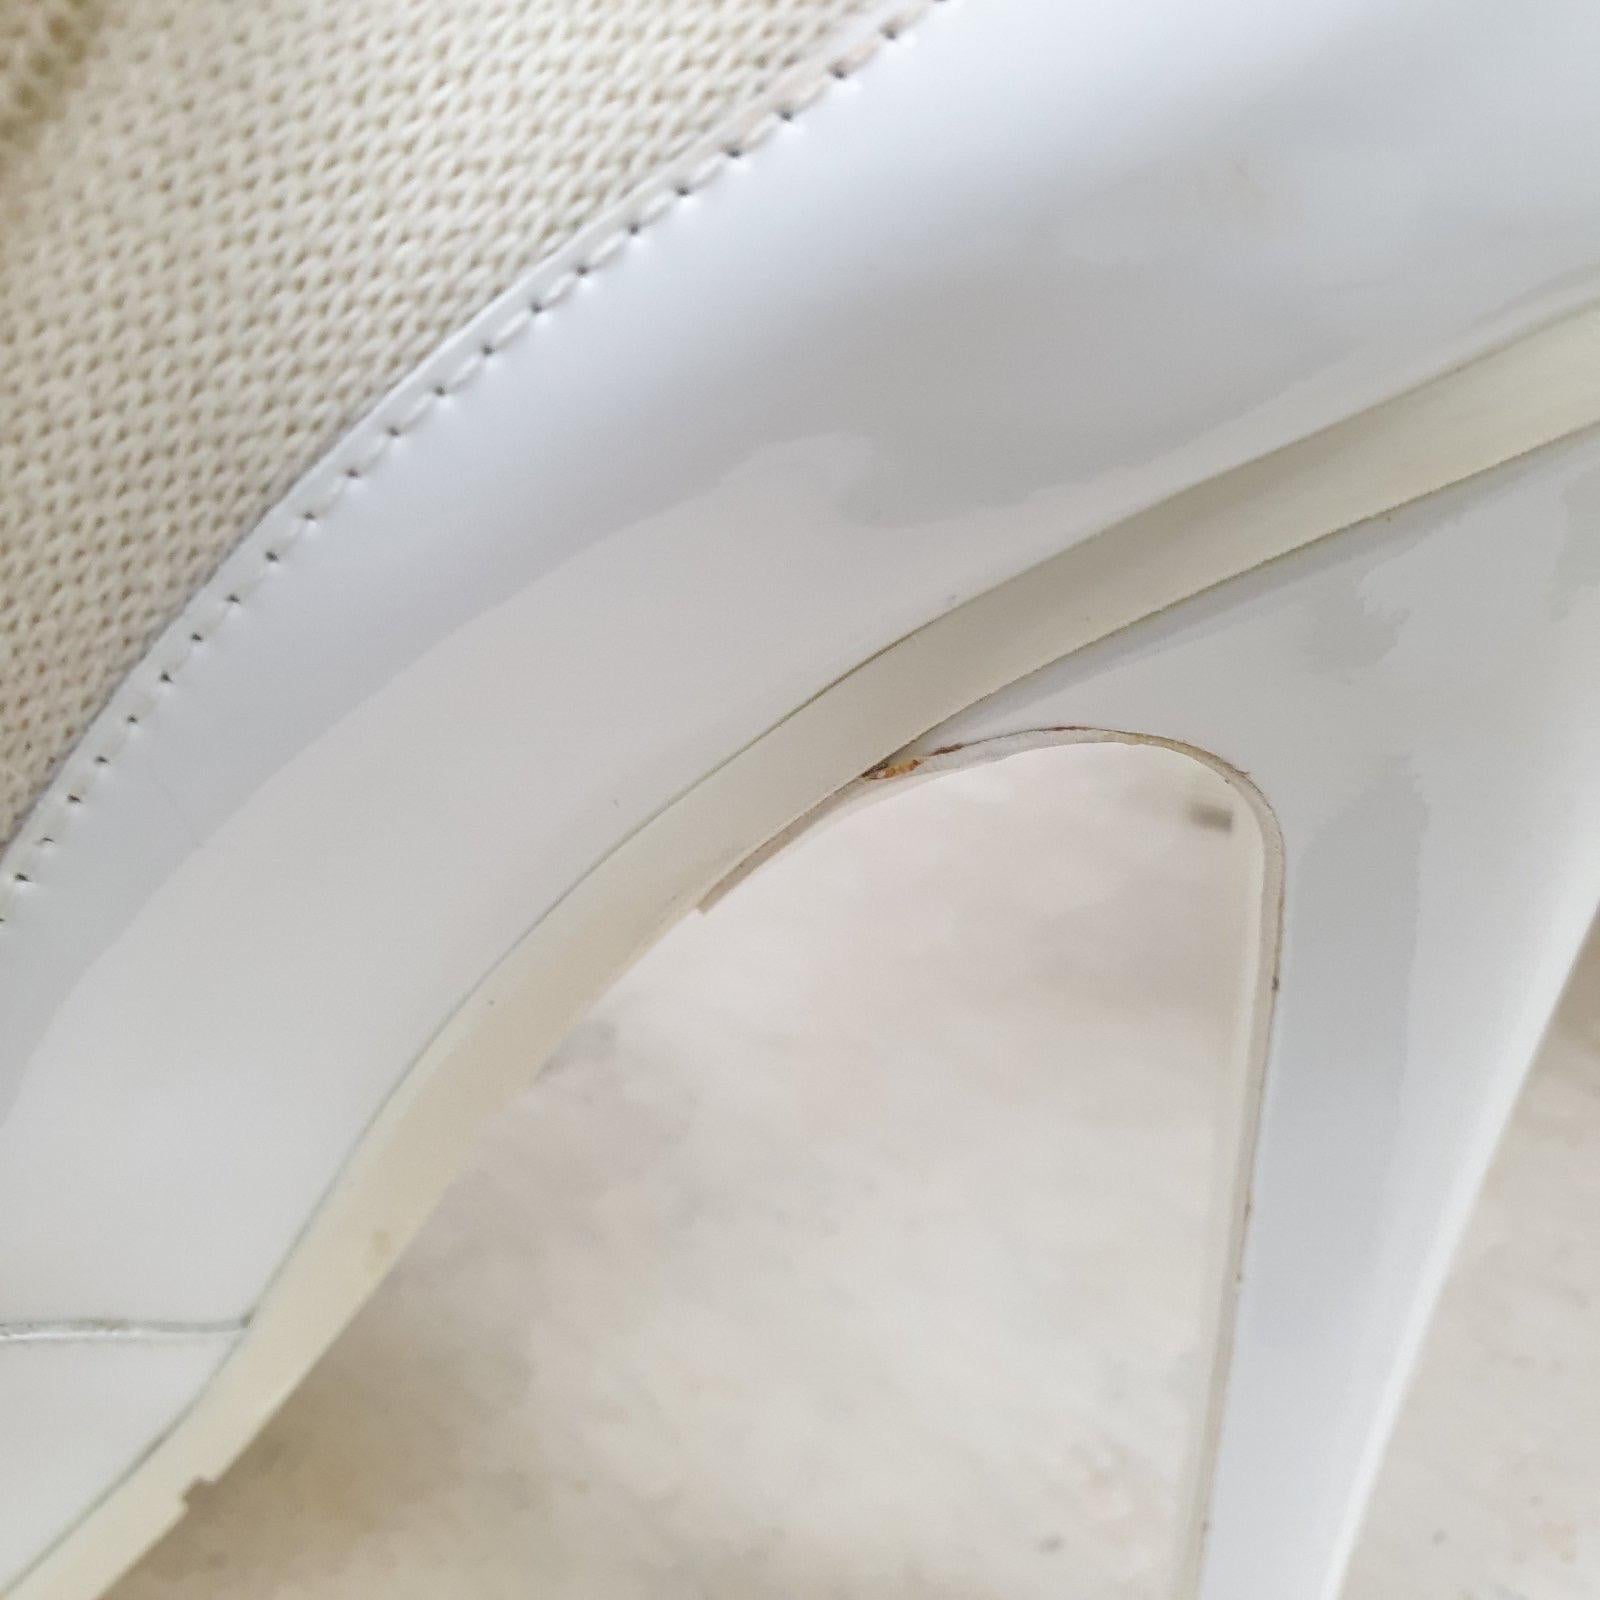 Women's CHANEL Paris Dubai White Patent Leather Knitted Pumps Heels